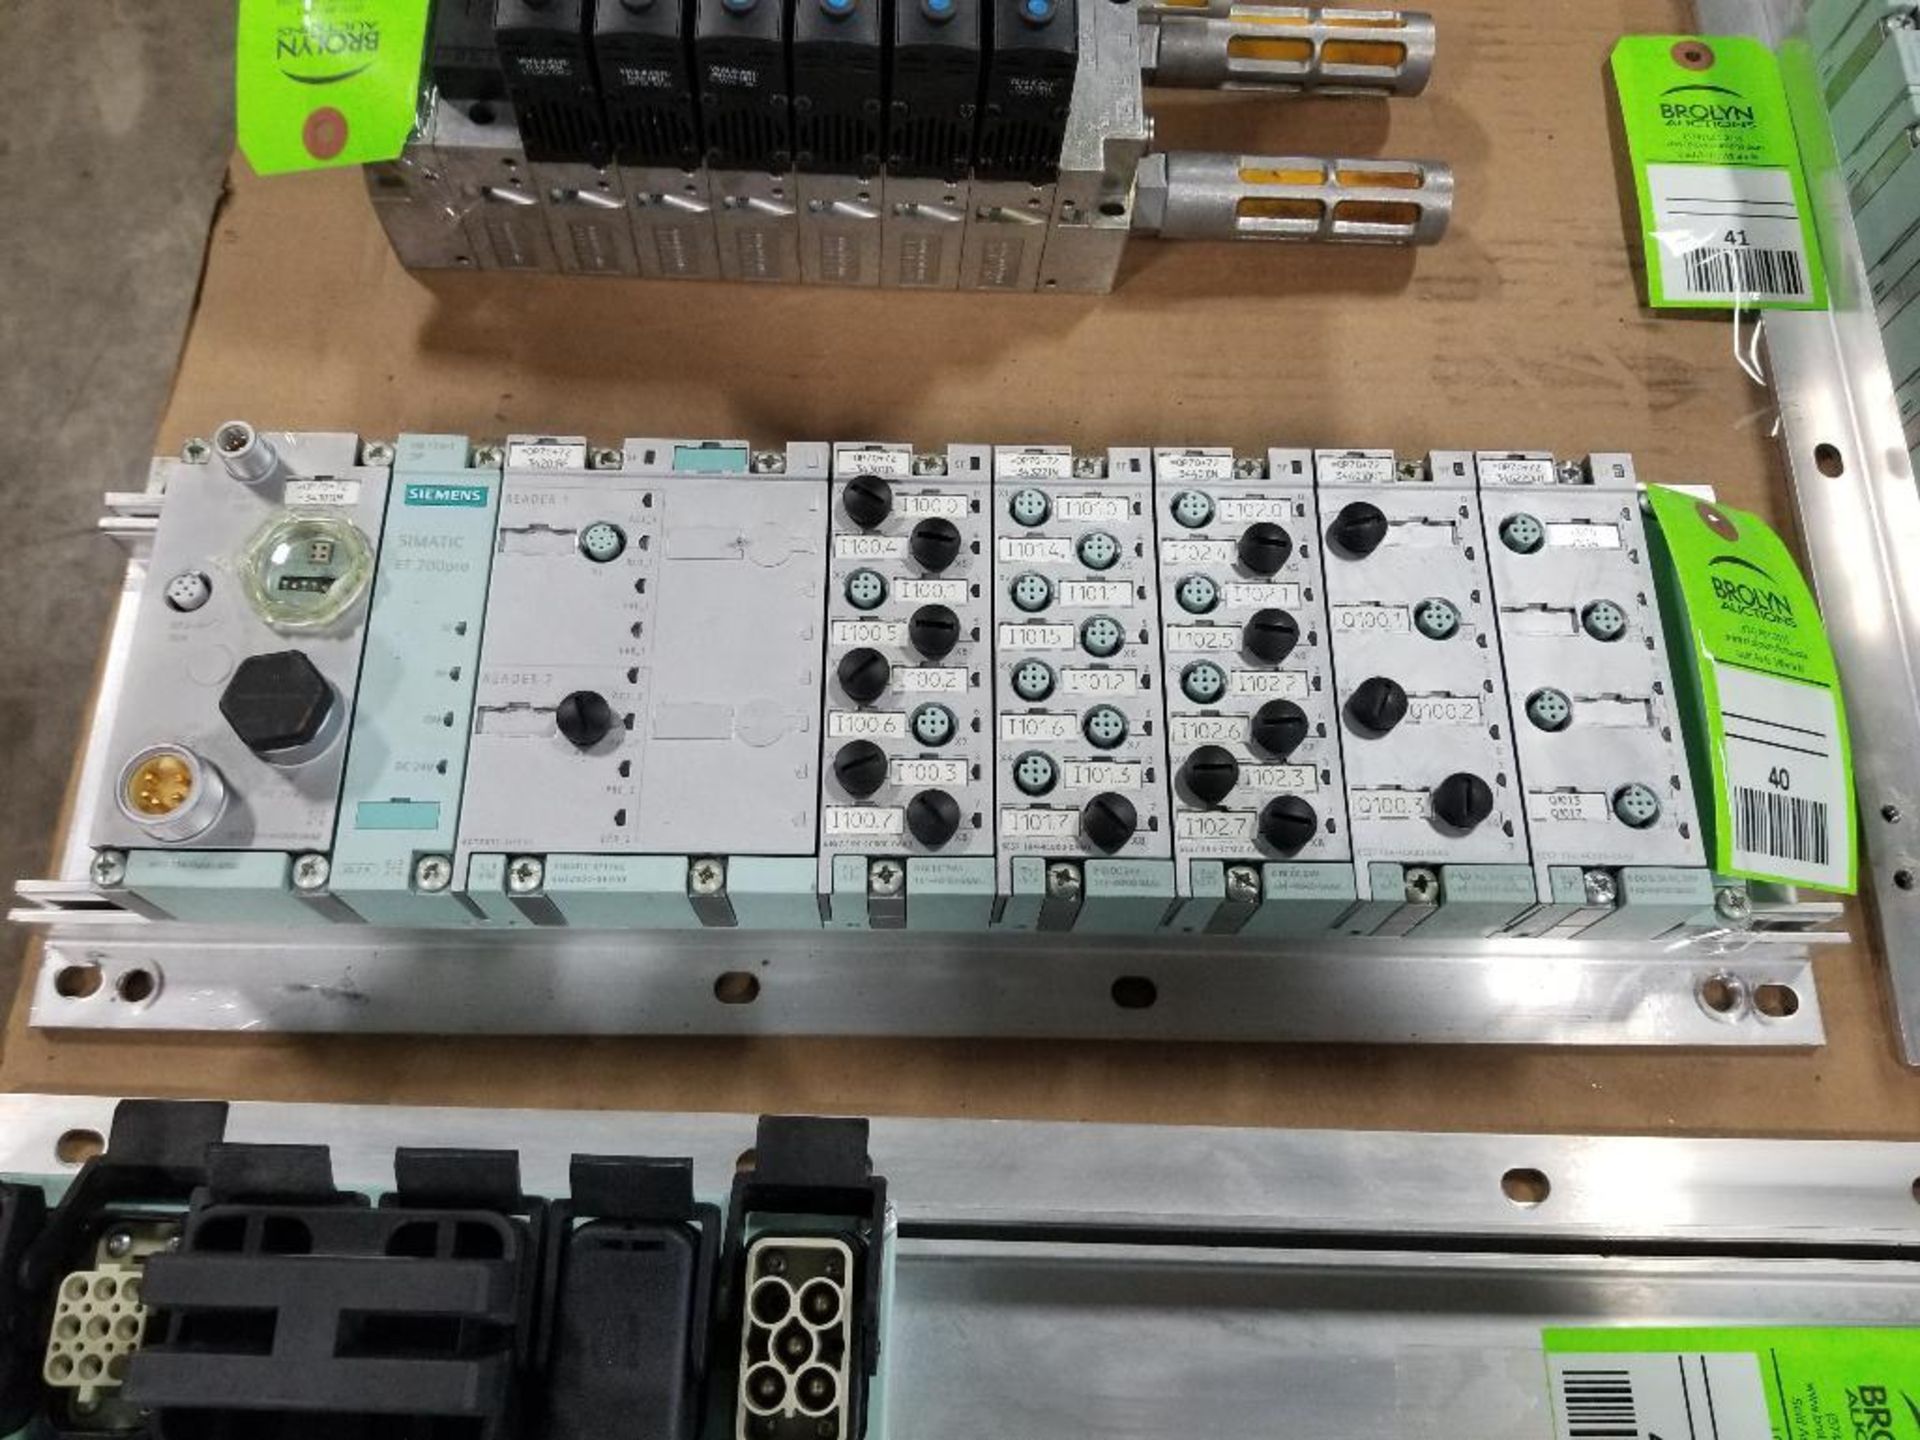 Loaded Siemens Simatic PLC rack.